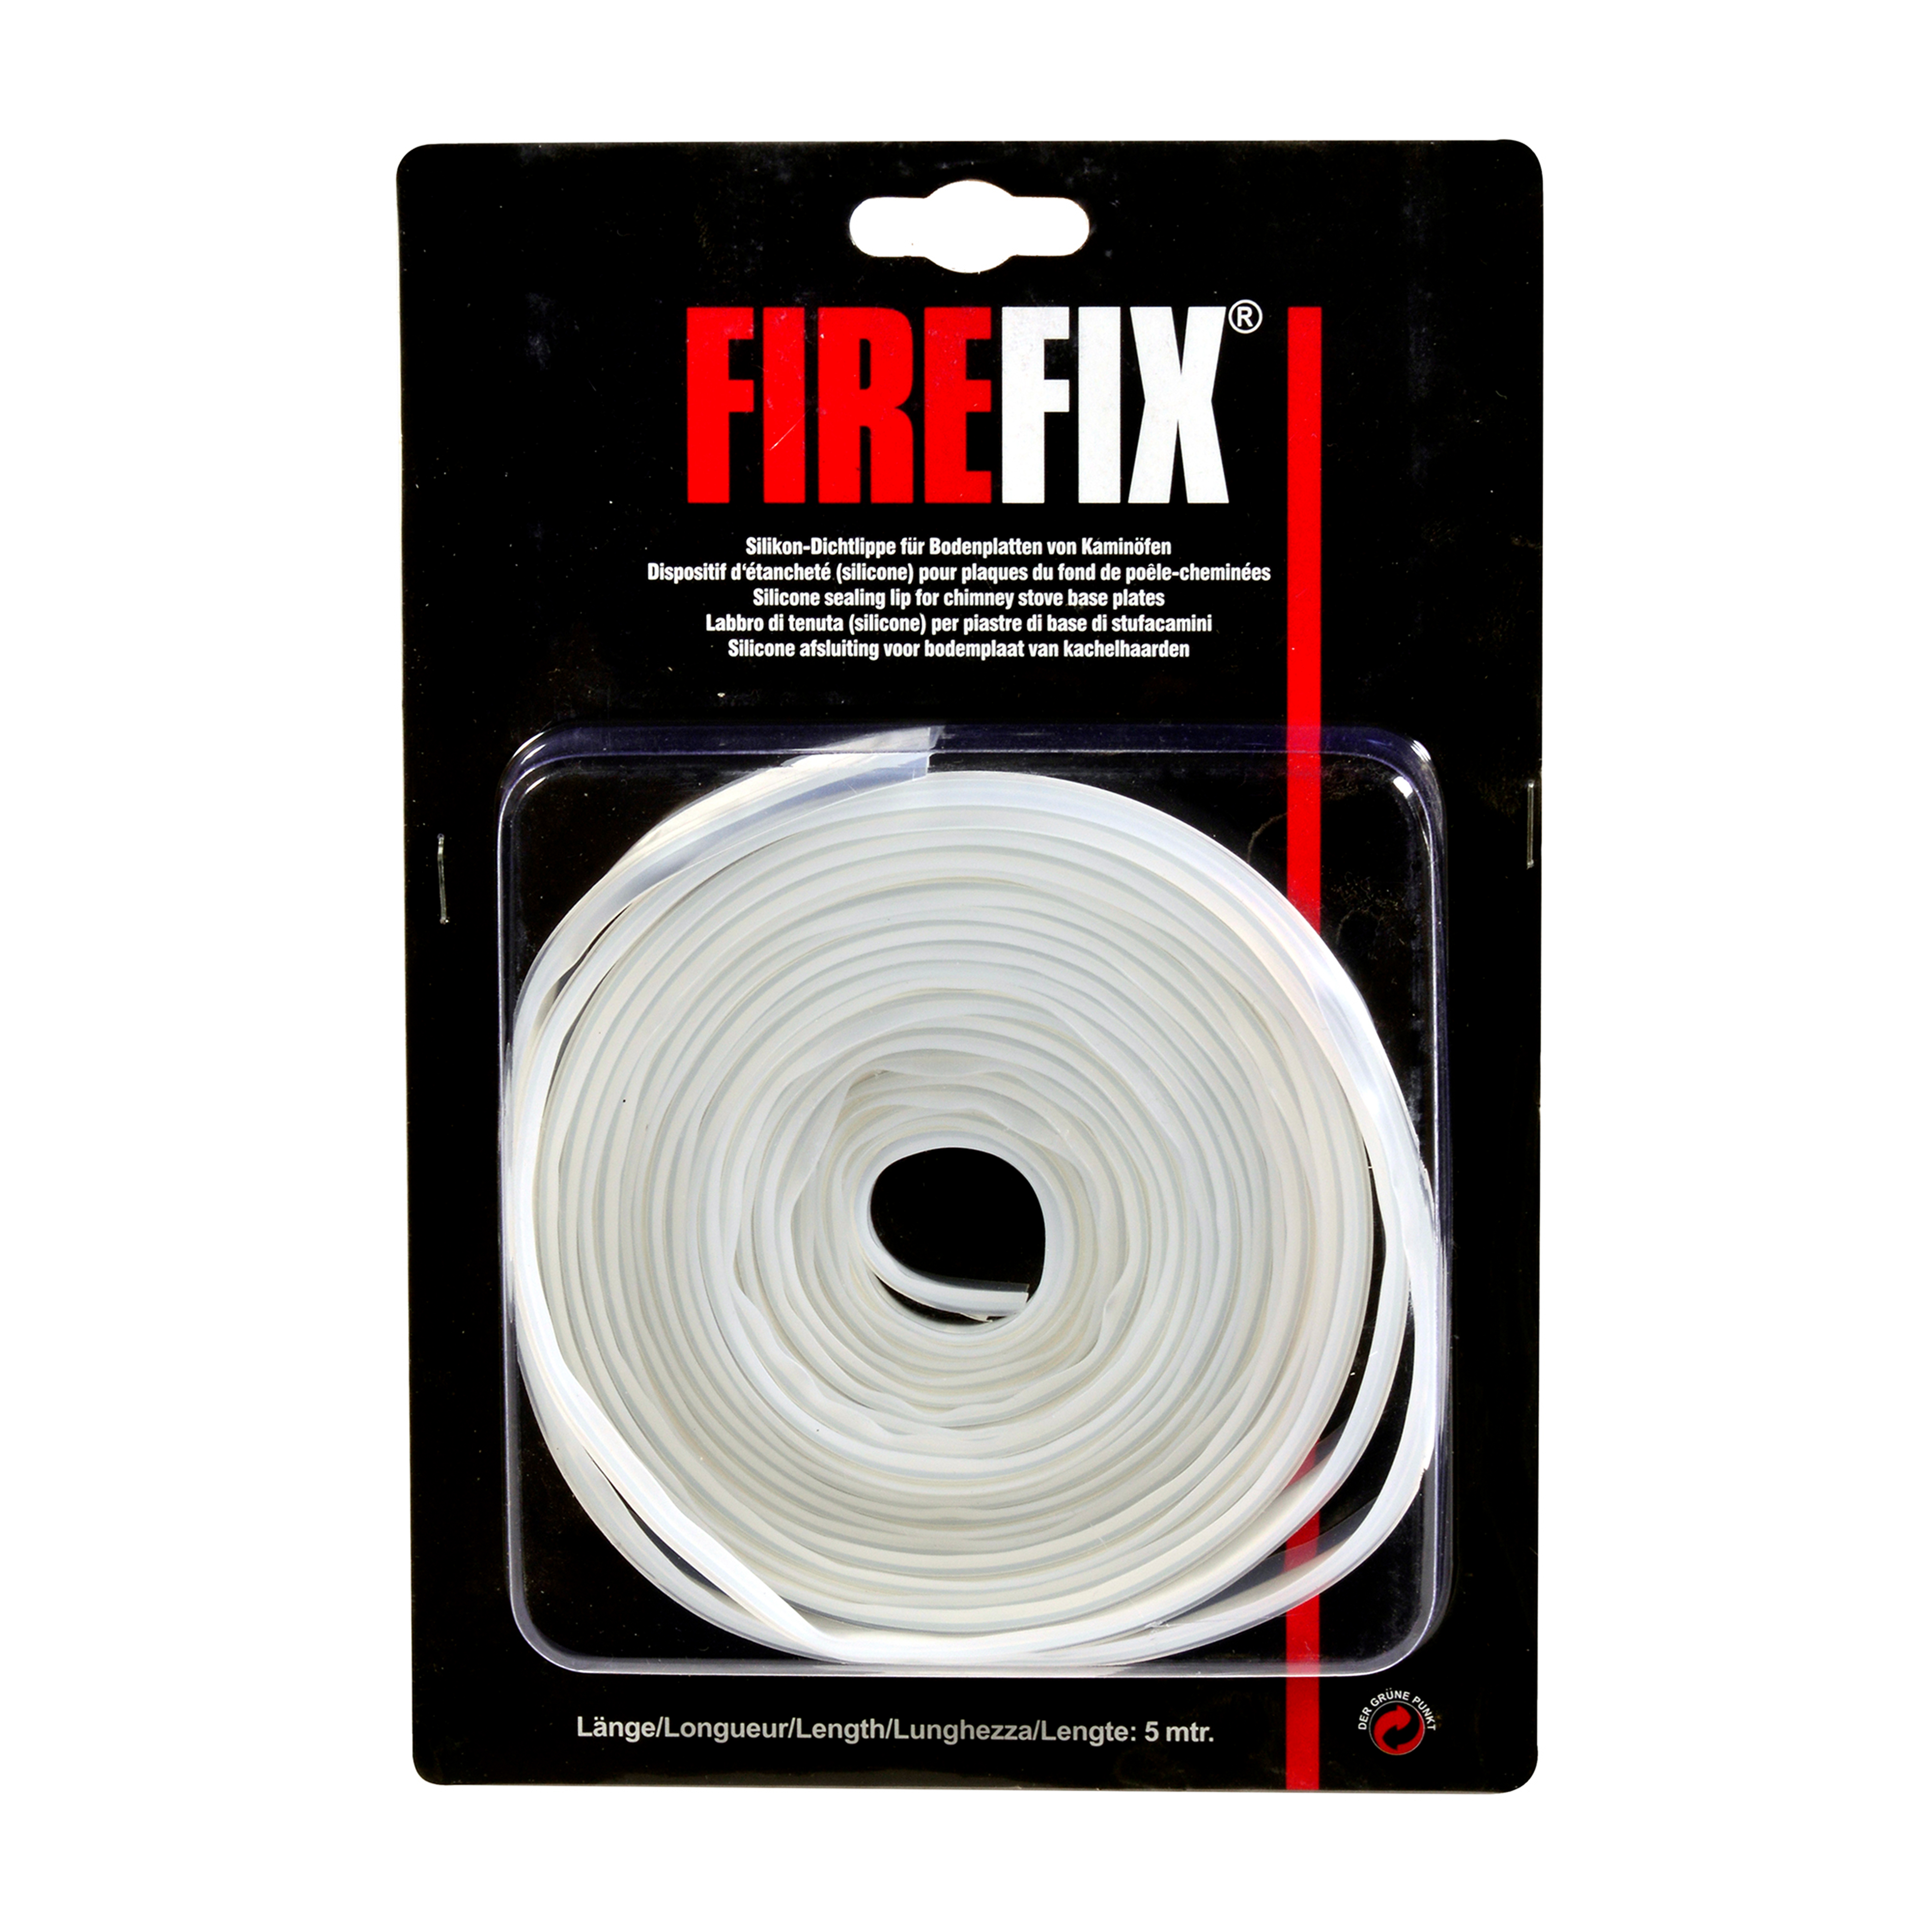 FIREFIX® Dichtlippe für Bodenplatten, 5 m